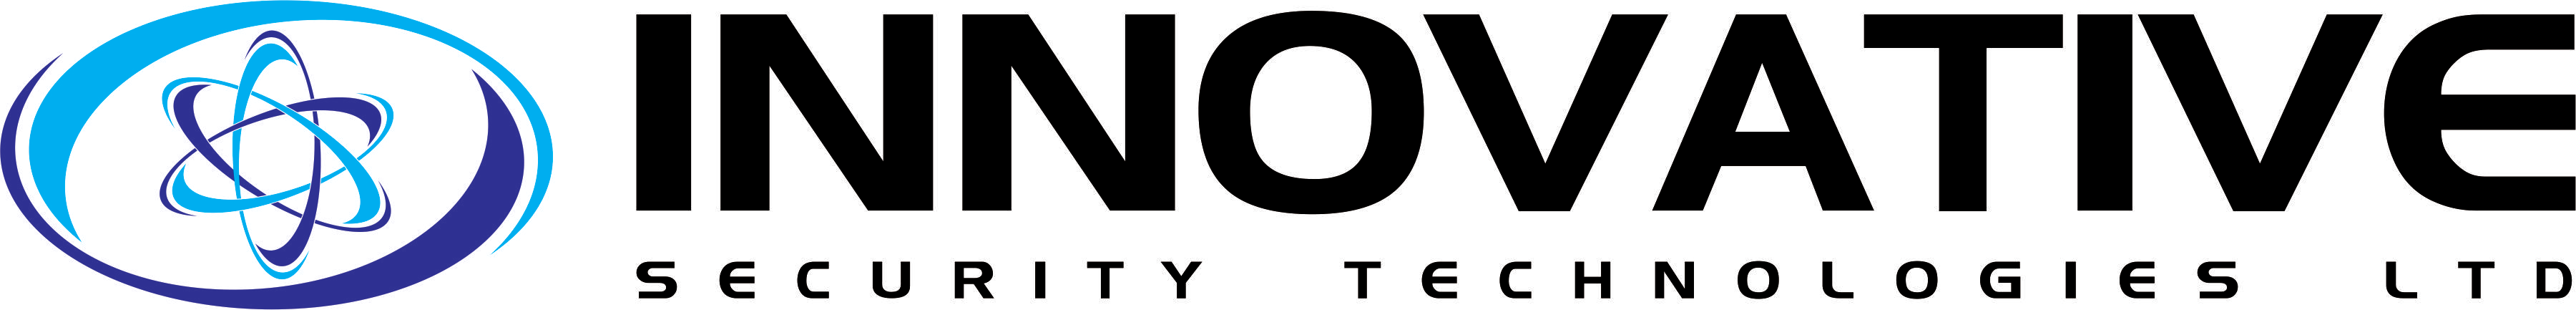 Innovative Security Technologies LTD. Logo